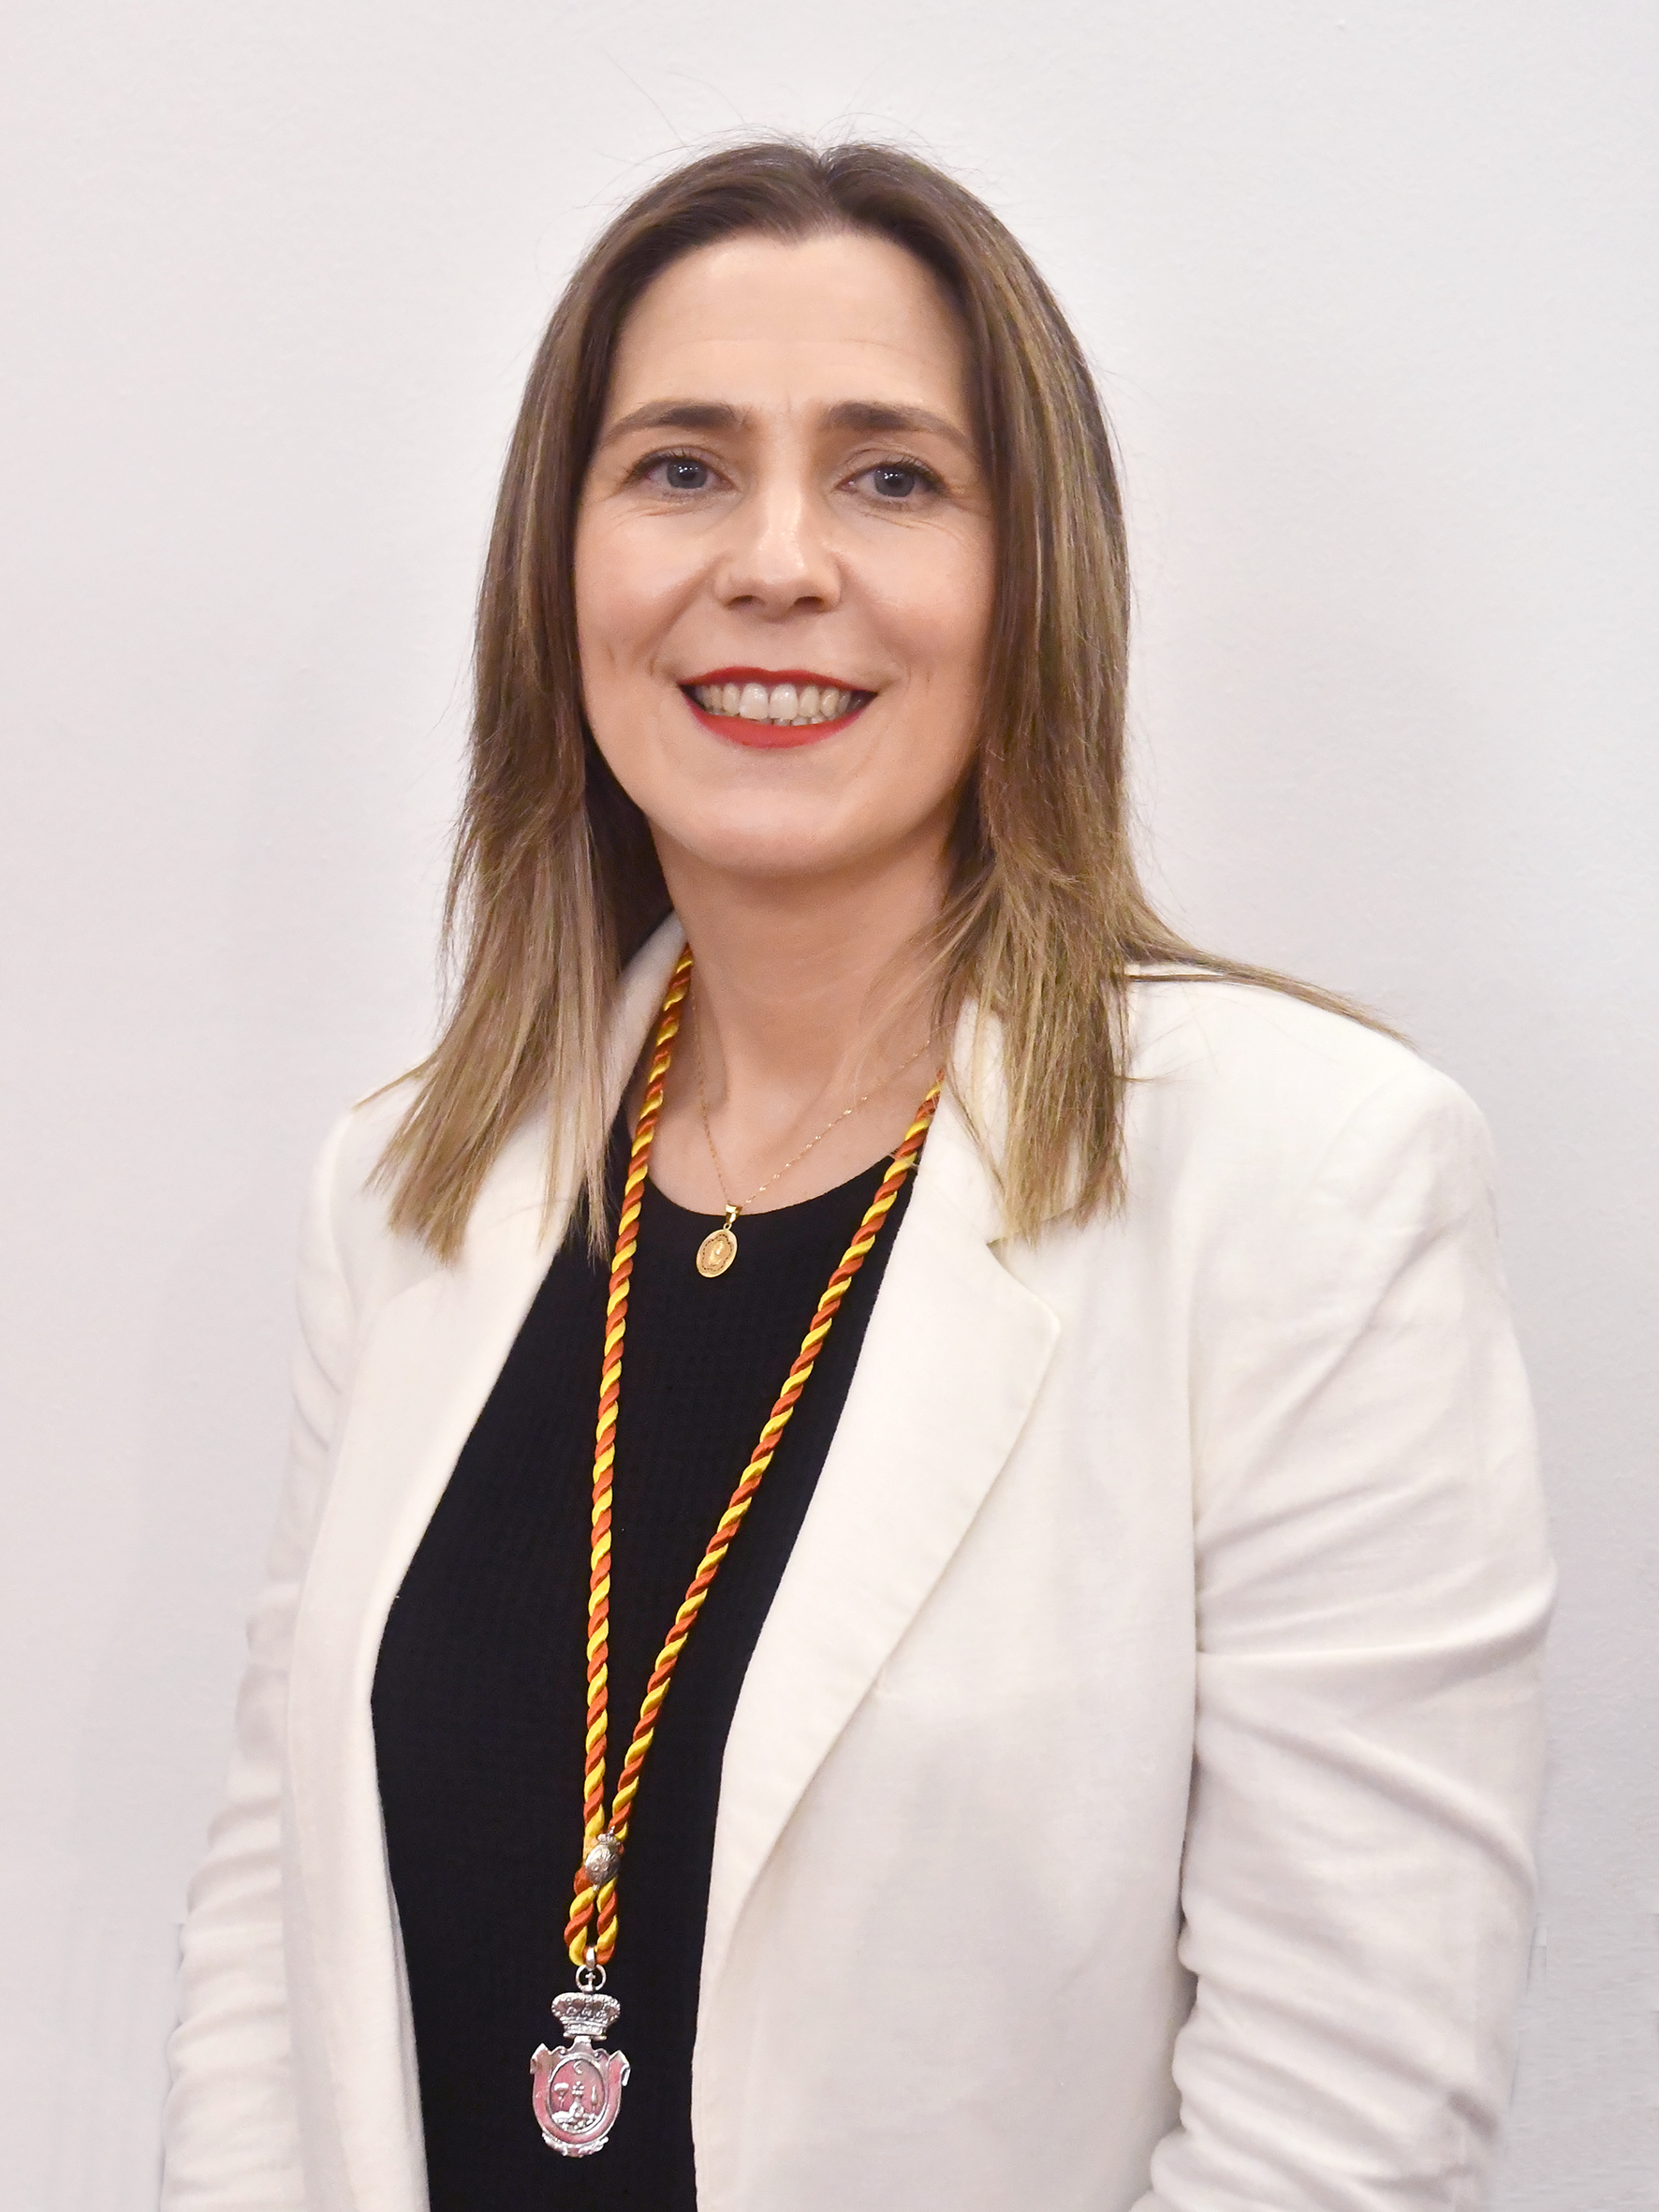 Dª. María José Tejada Jiménez